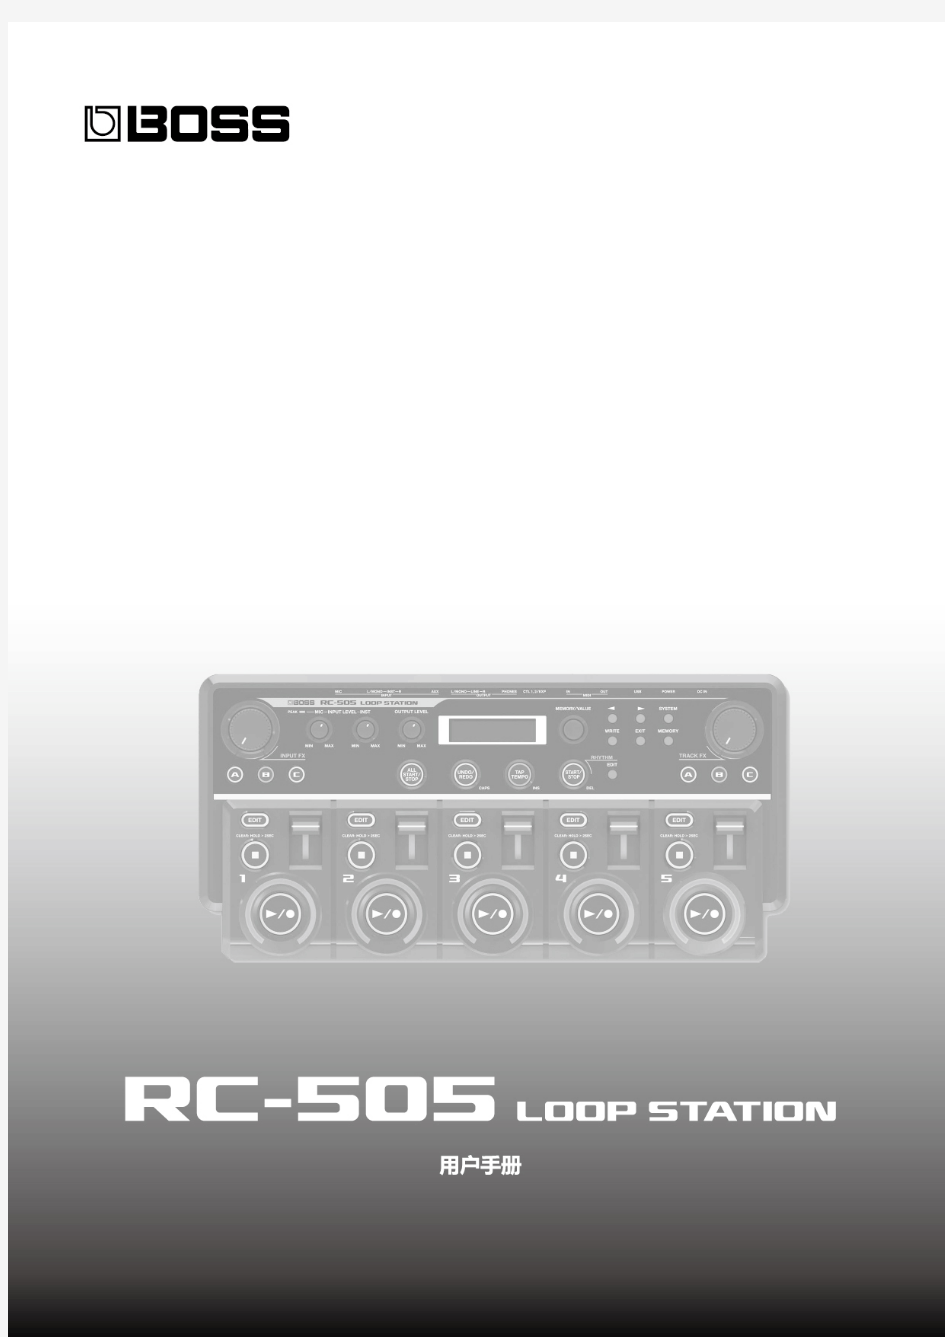 RC-505用户手册(说明书)中文版